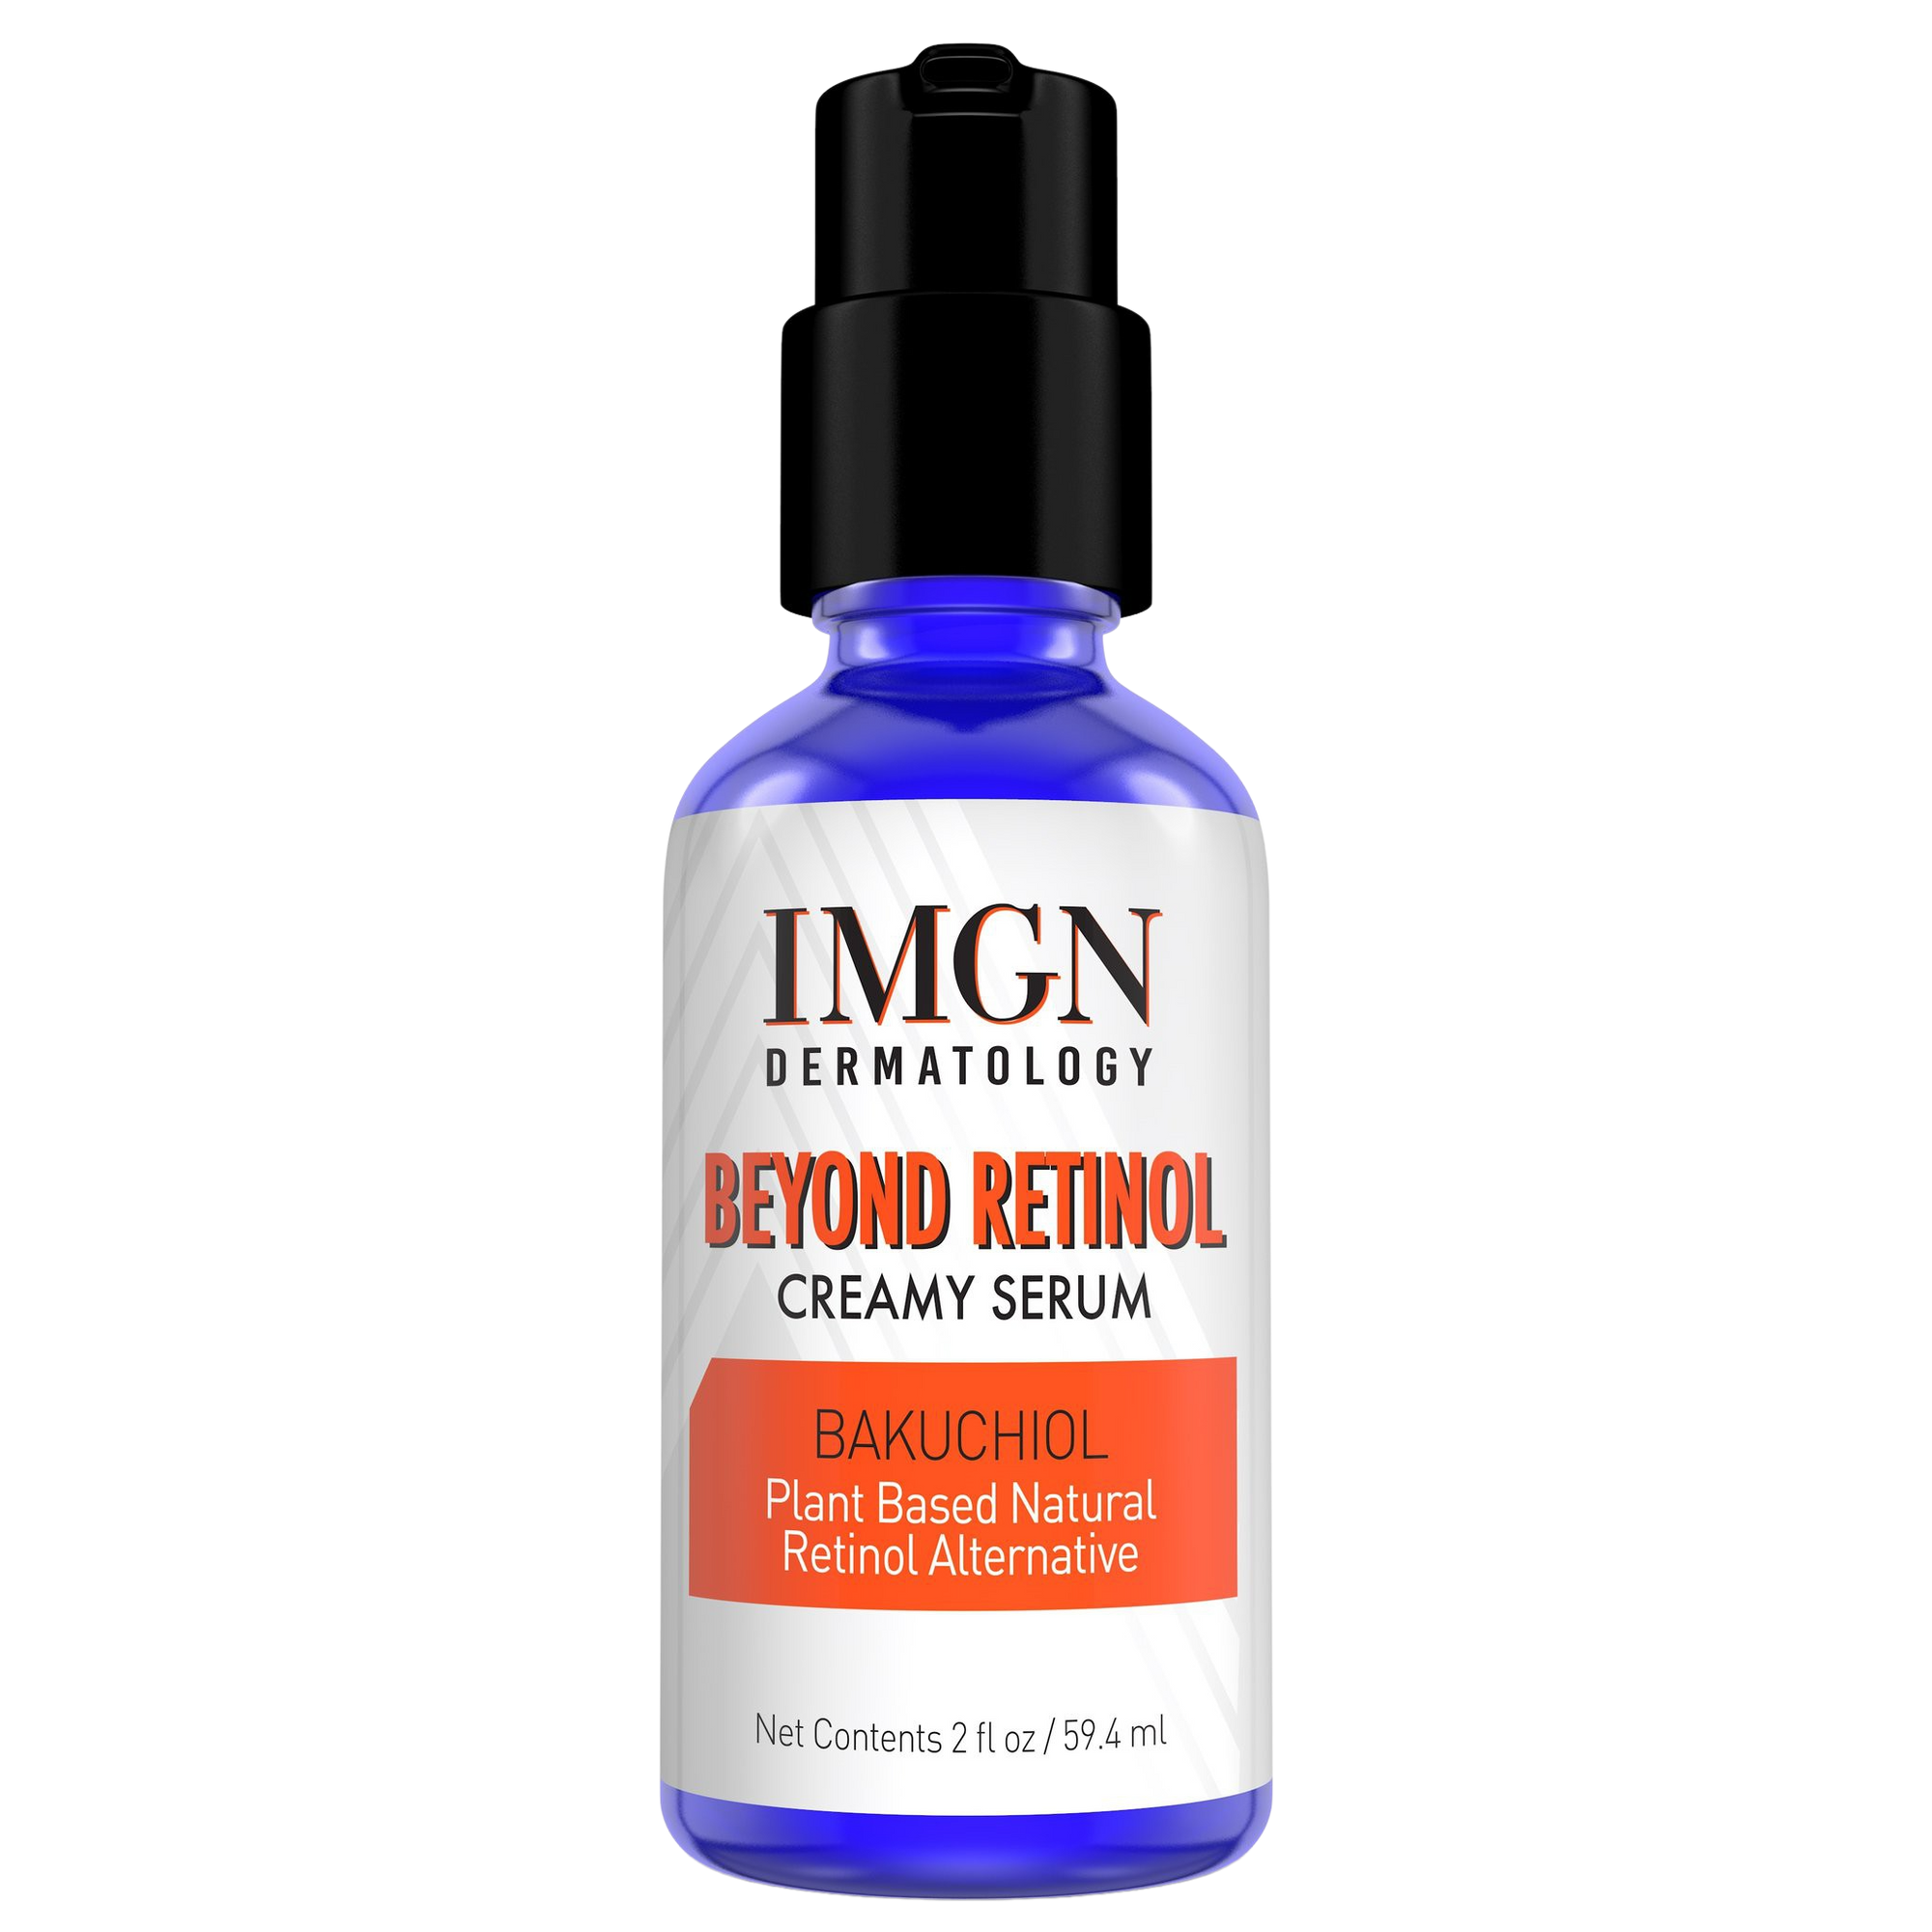 Beyond Retinol Creamy Serum Bakuchiol Retinol Alternative Advanced Delivery System Hyaluronic Acid 2 fl oz/59.4 ml (2 fl oz)